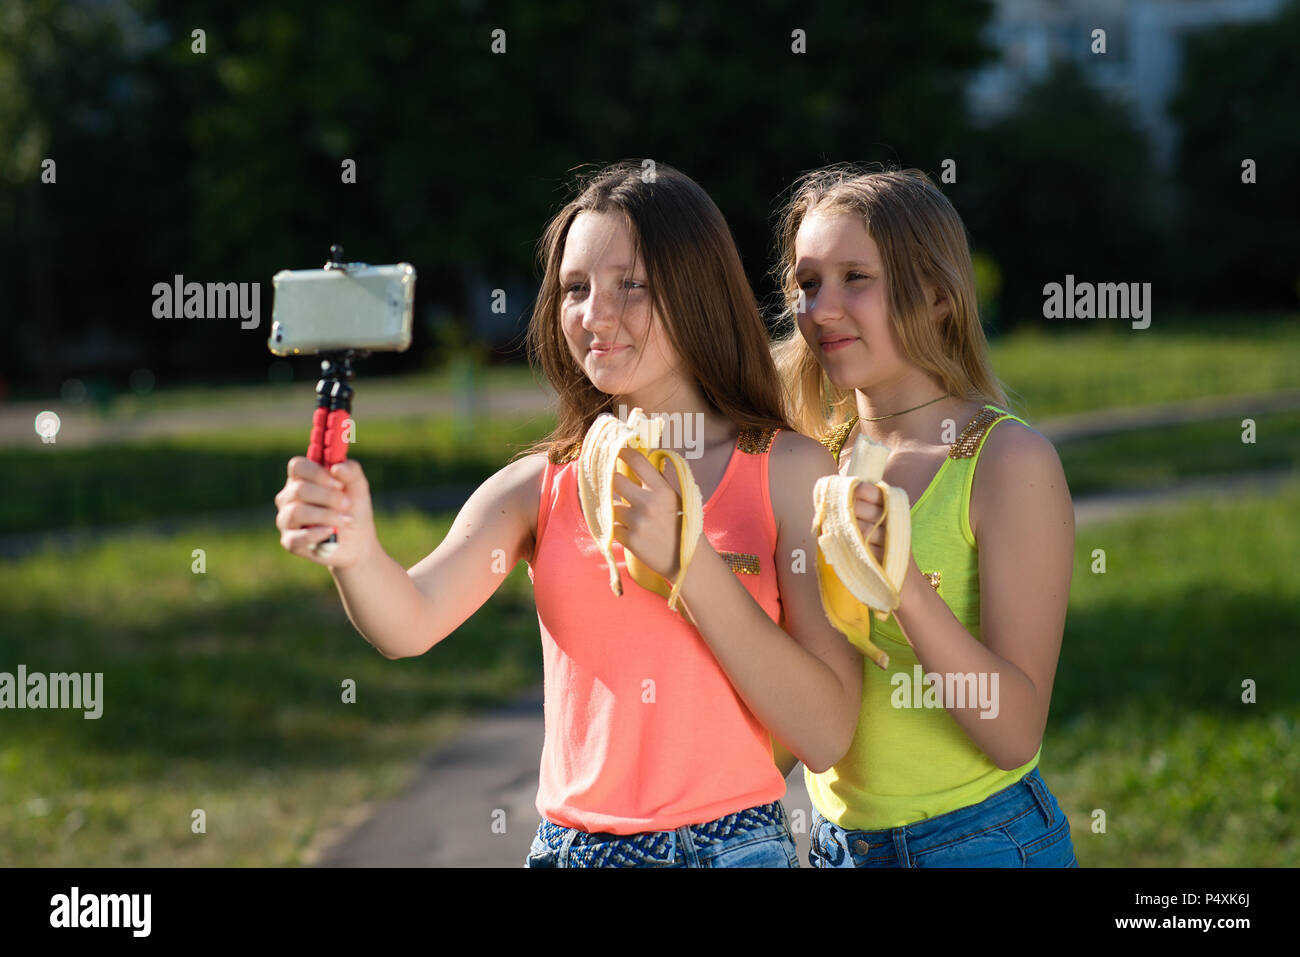 Two Girls Schoolgirl Girlfriends Summer In Nature In His Hands Holds Camera Eats Bananas The 